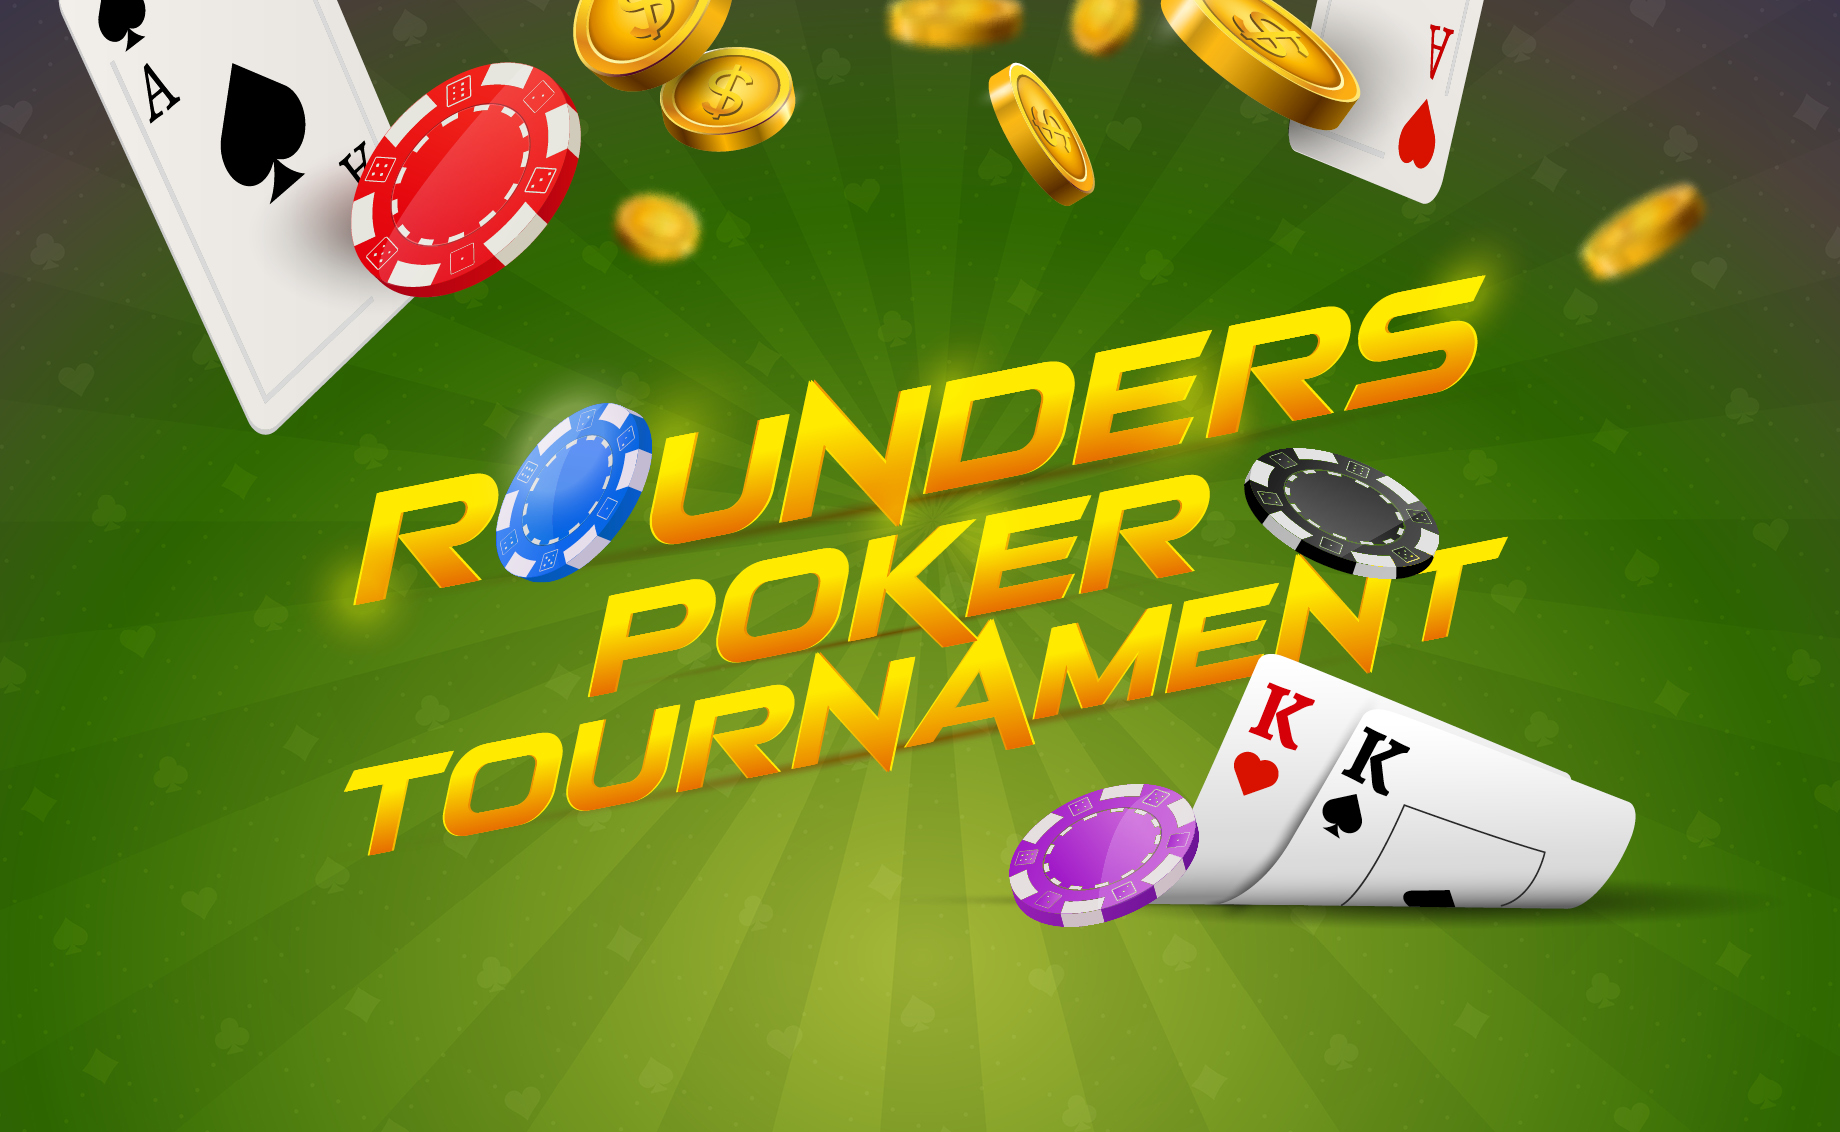 rounders poker slang